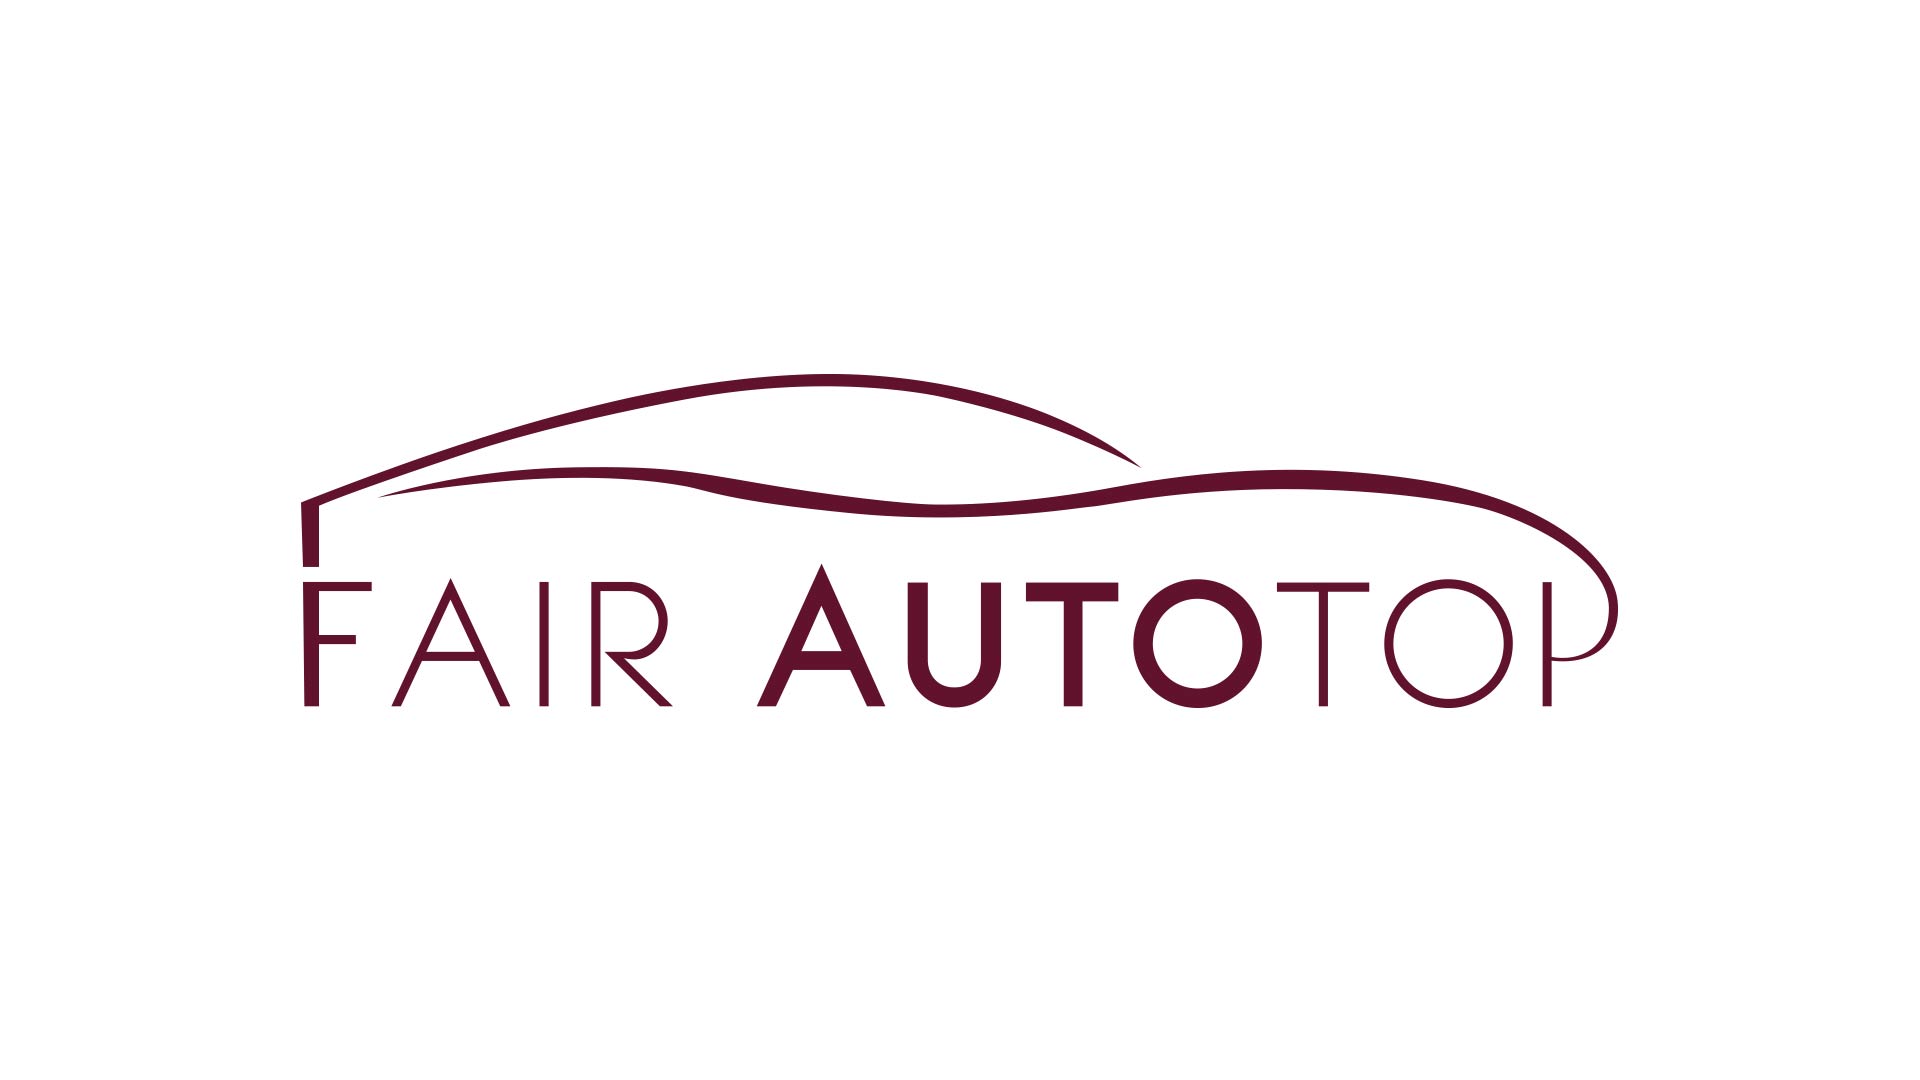 Tvorba loga - logo Fair autotop